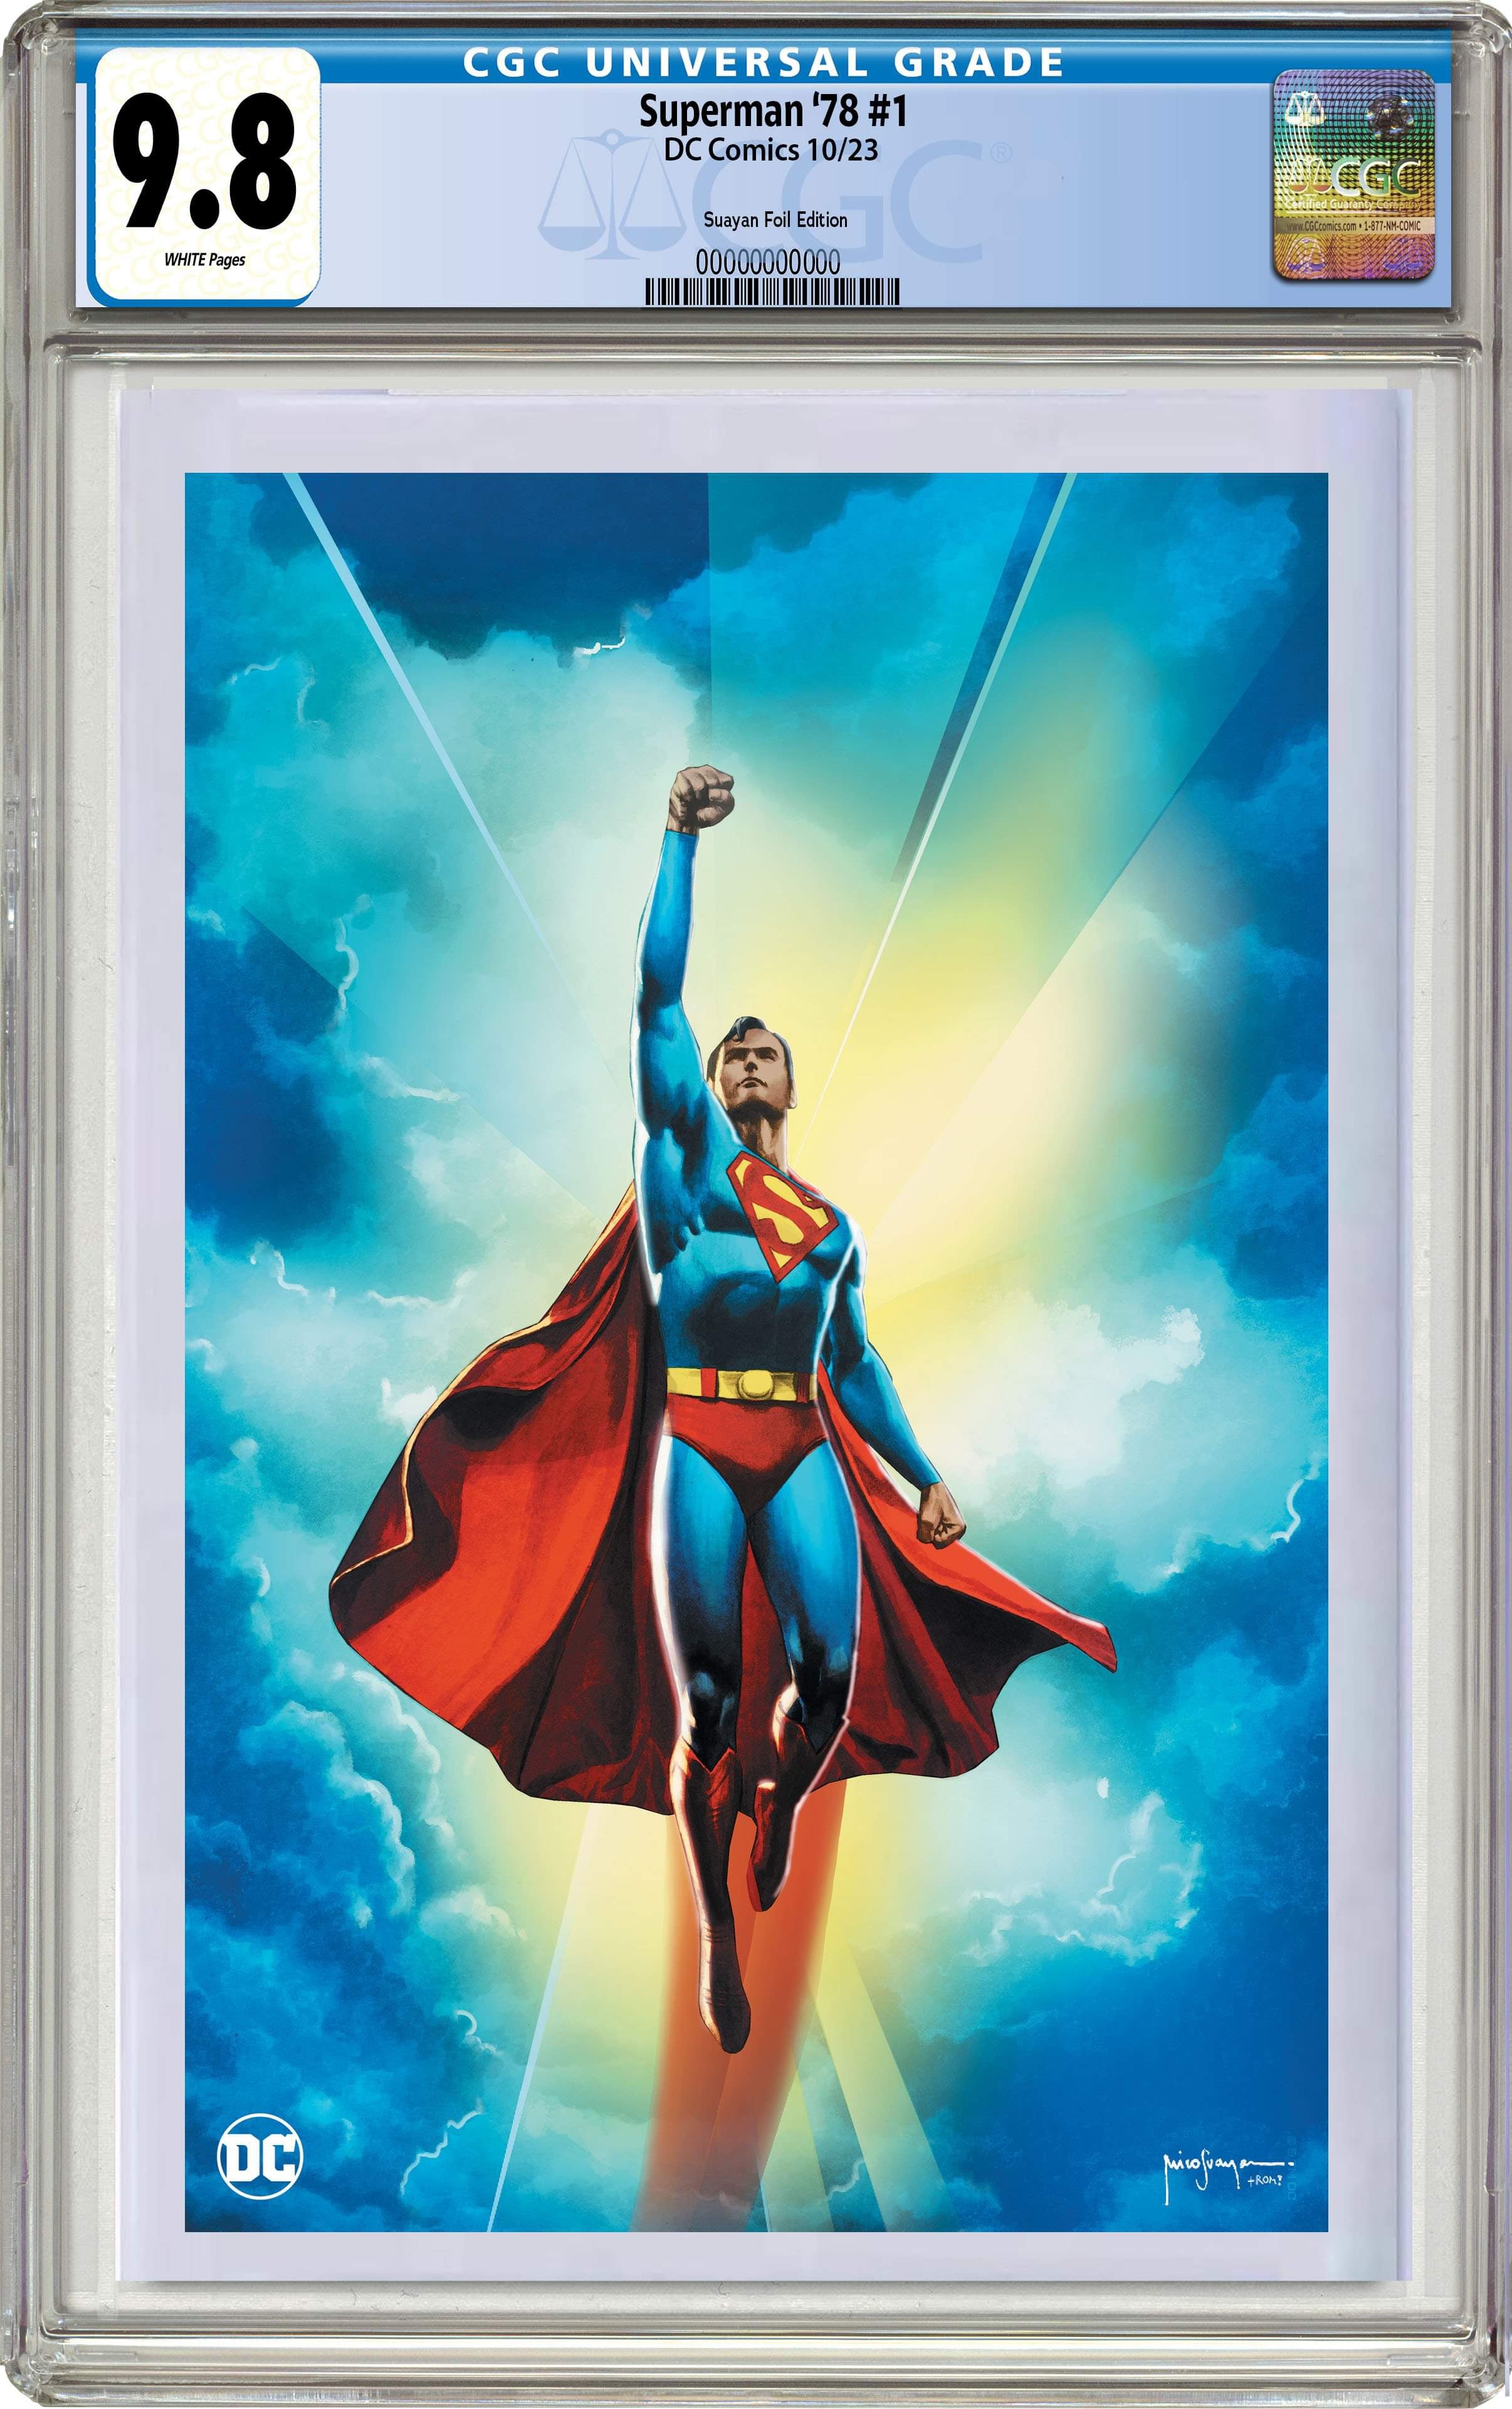 SUPERMAN 78 #1 MICO SUAYAN NYCC EXCLUSIVE FOIL VARIANT